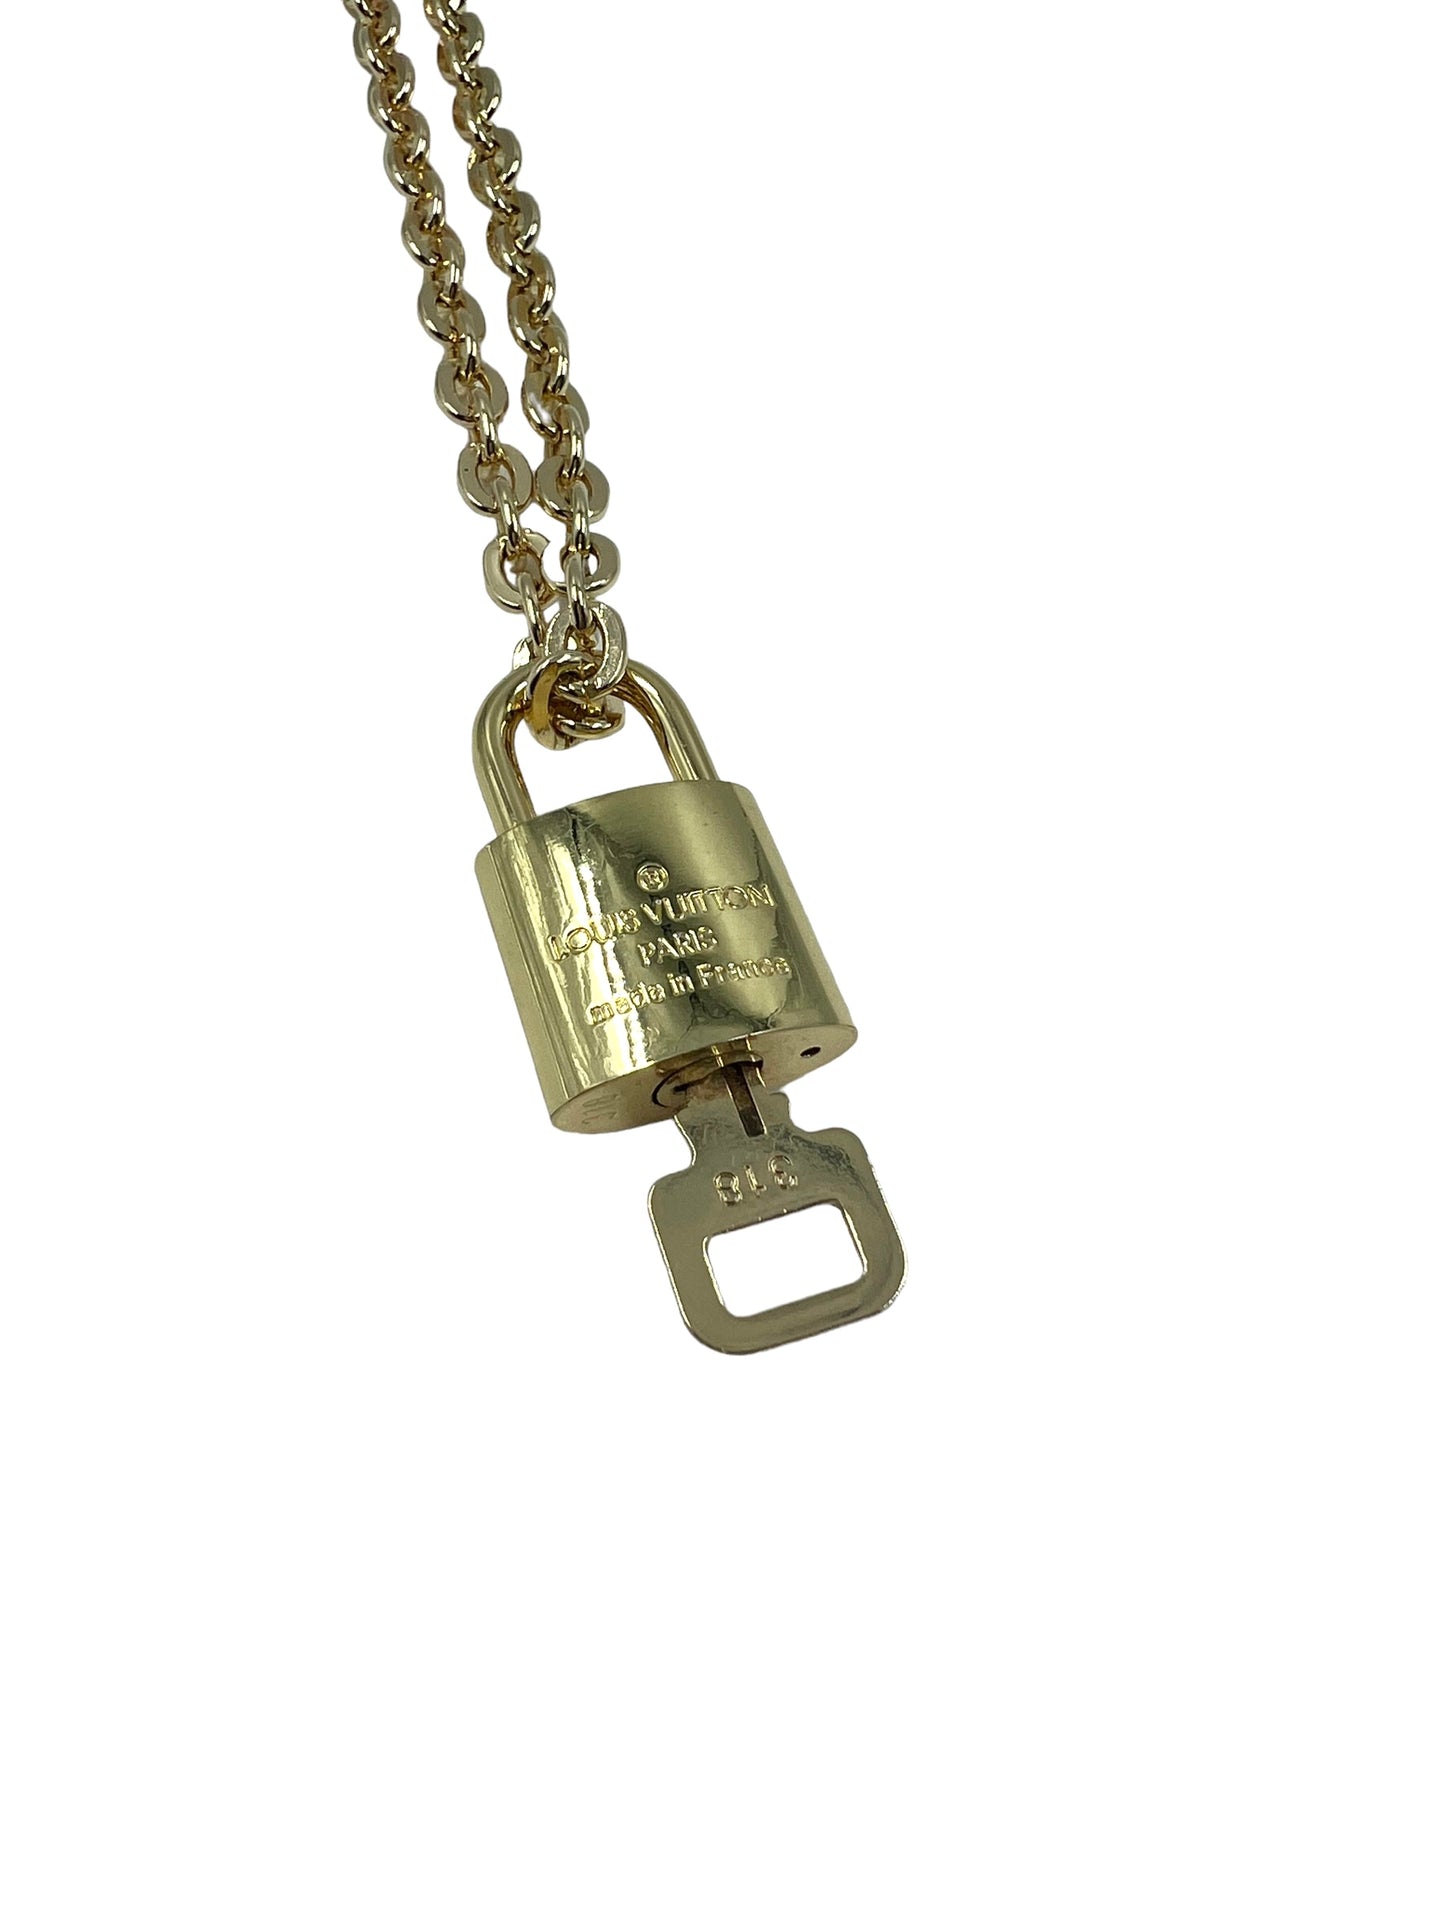 Repurposed Gold Chain Lock Necklace